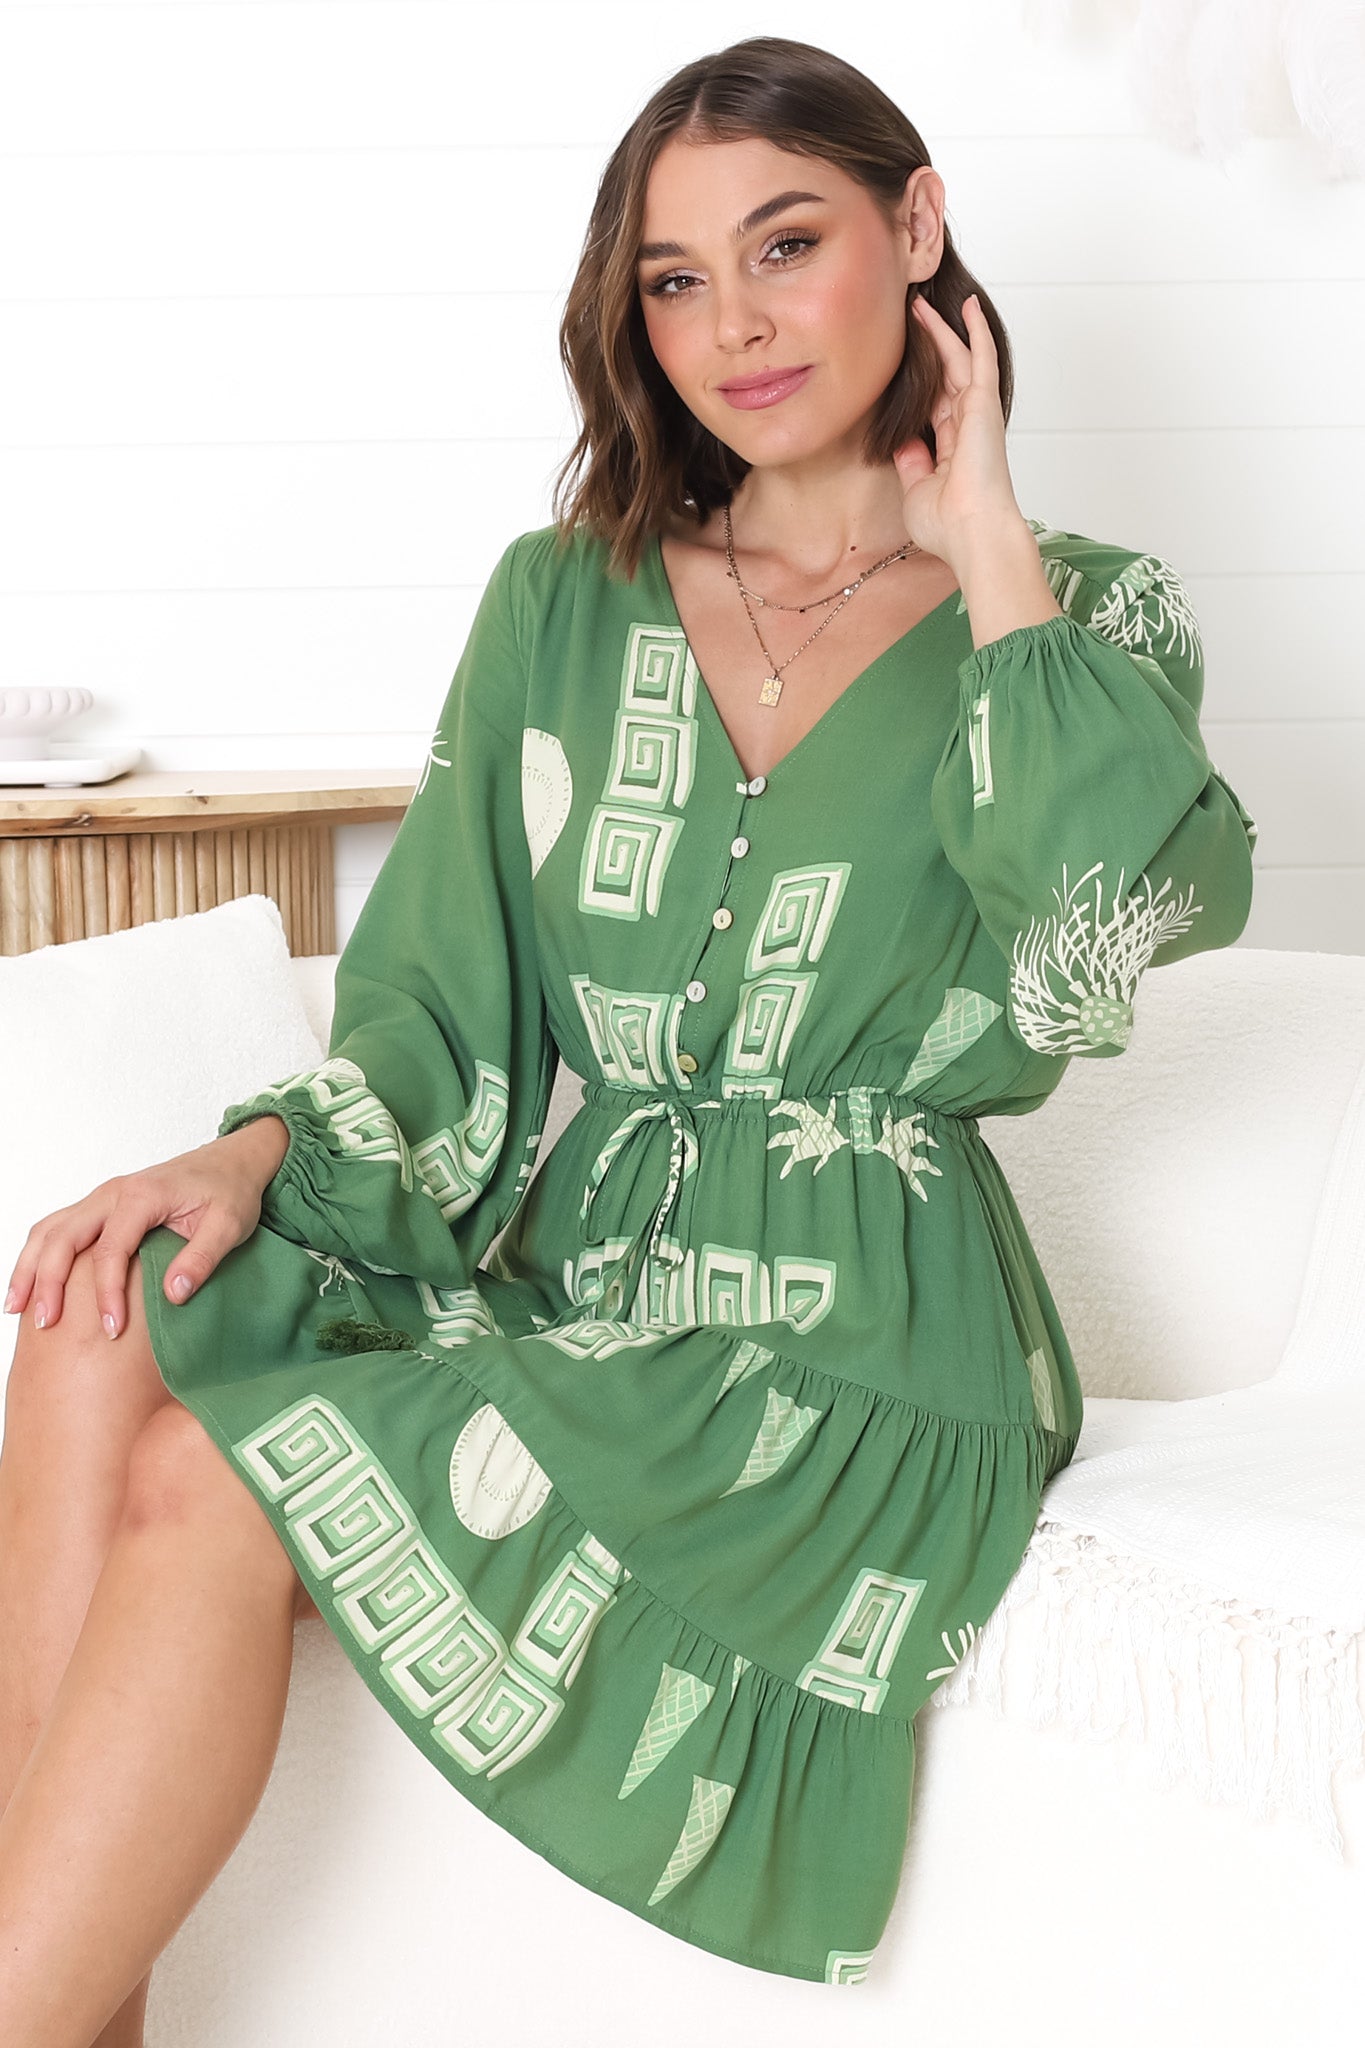 Alicia Mini Dress - A Line Tiered Dress with Pull Tie Waist in Maree Print Green